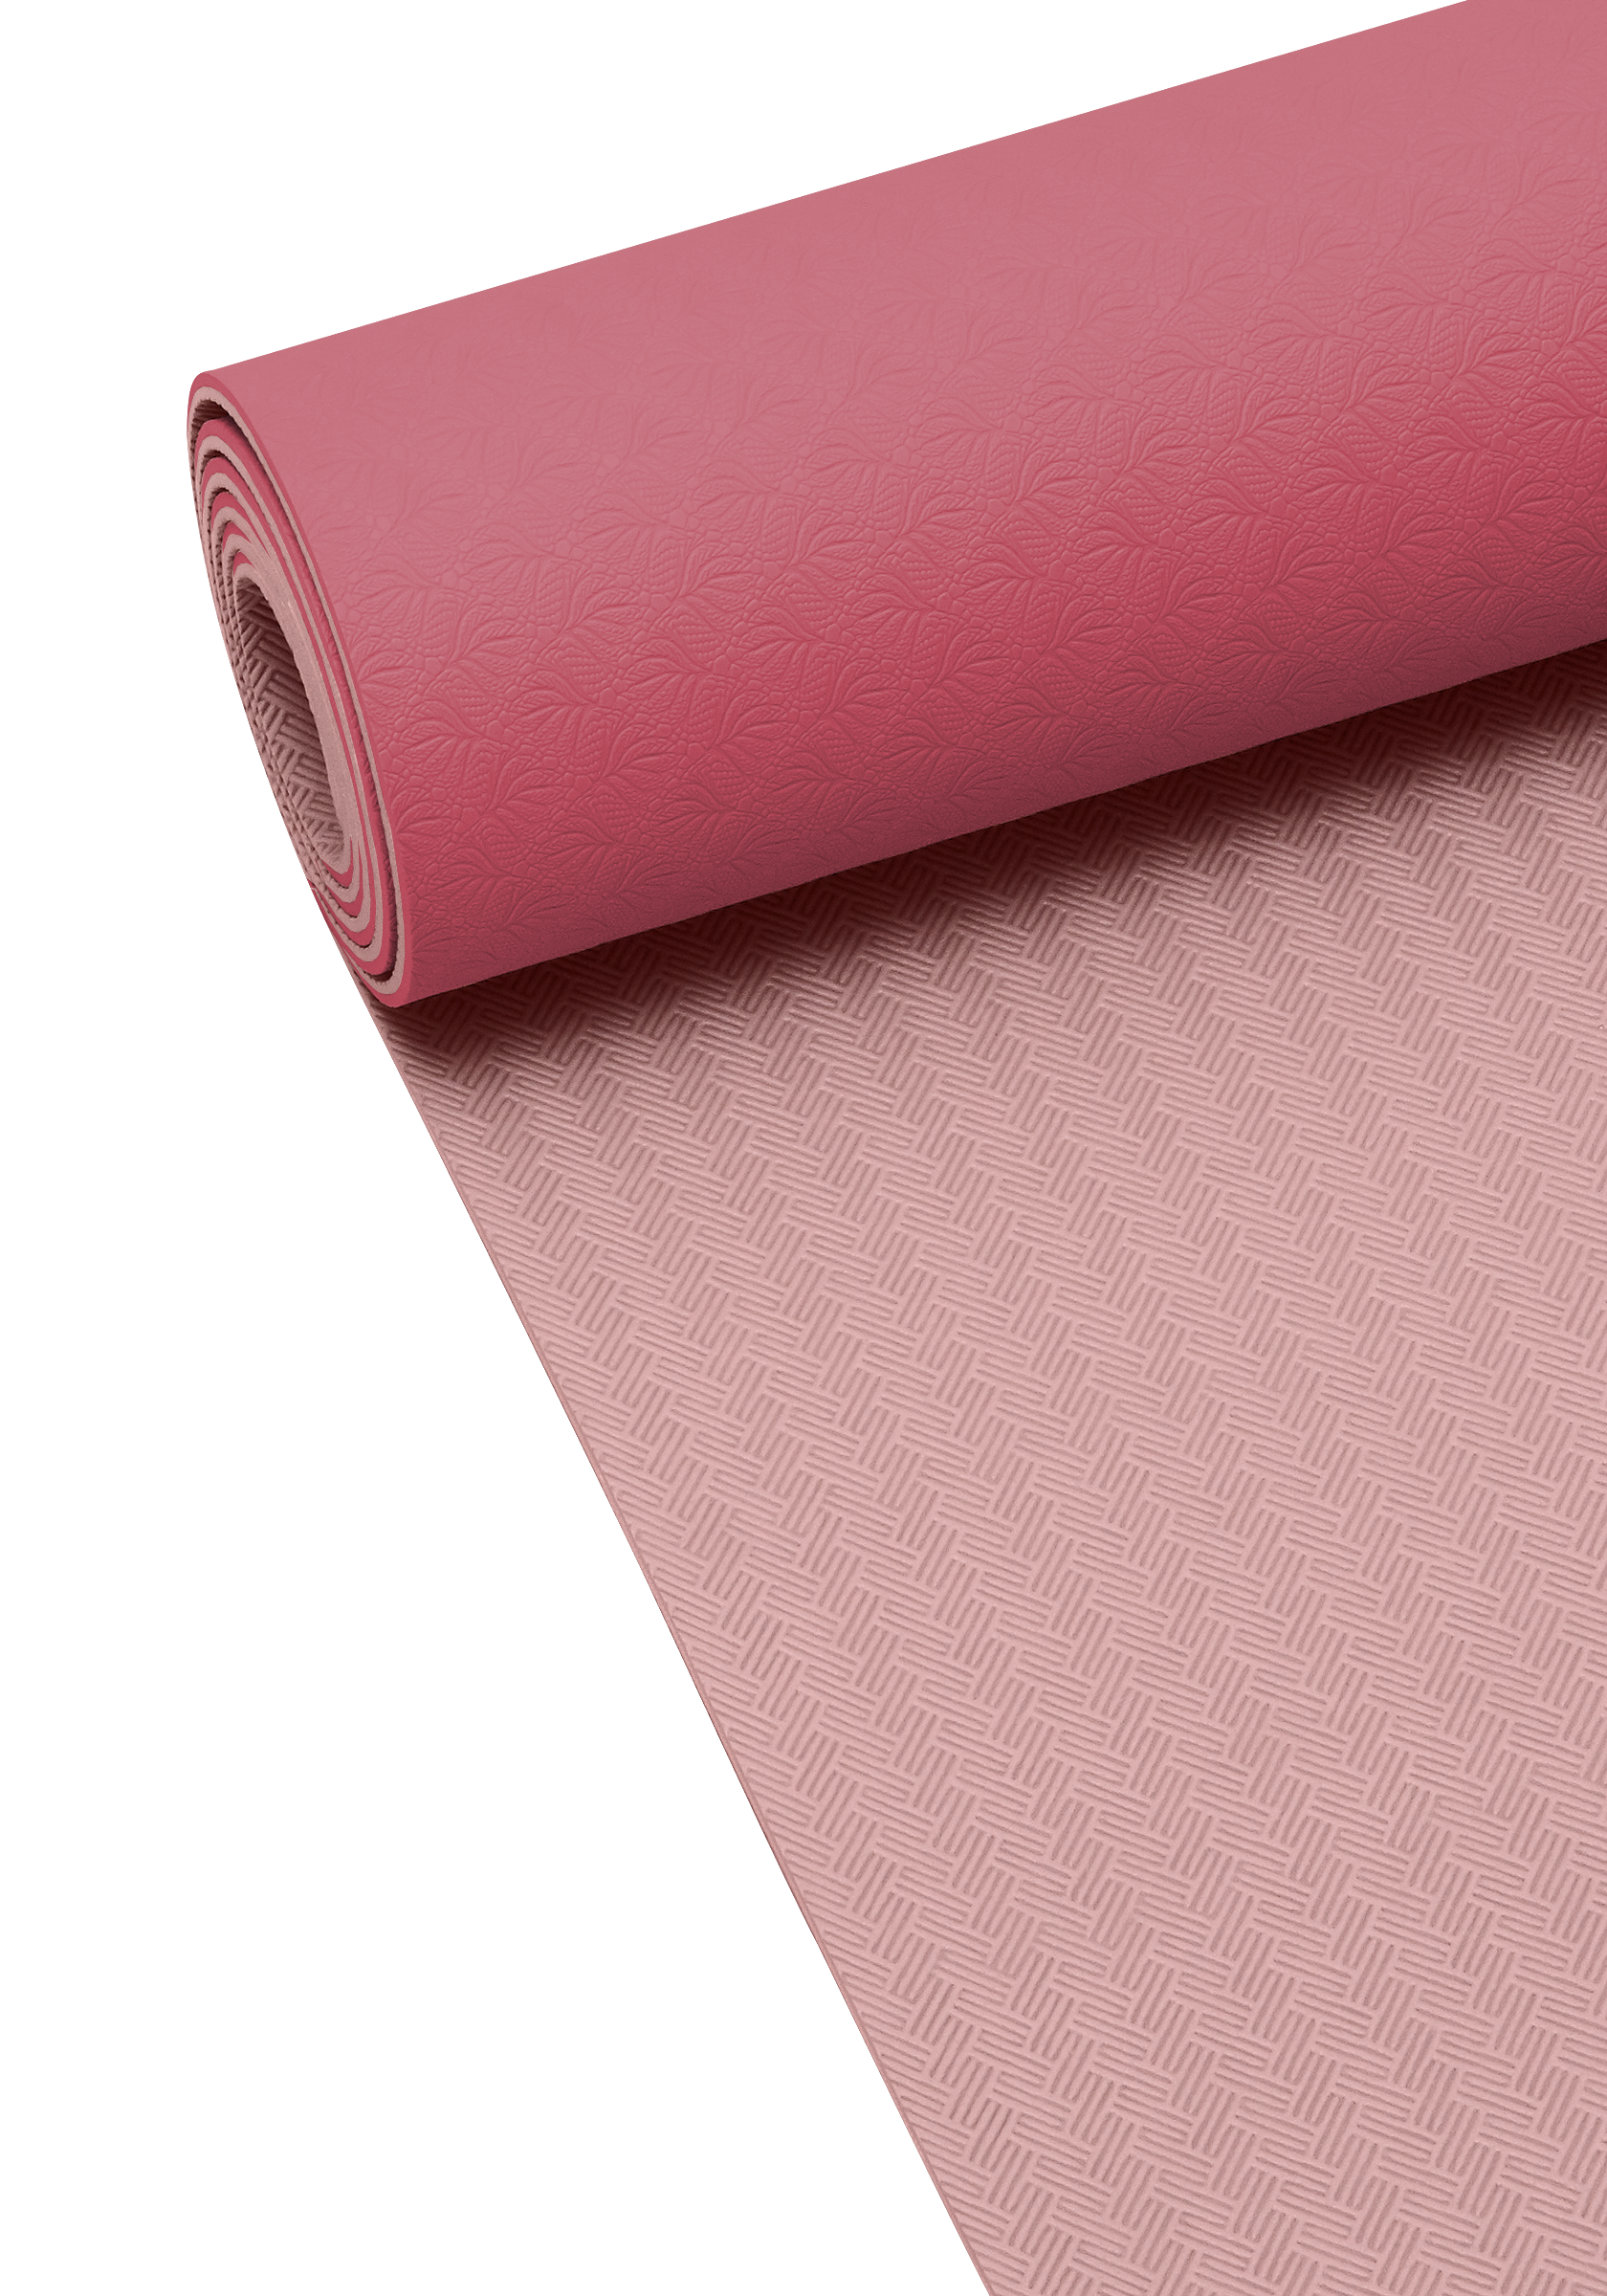 Pink Mandala NBR YOGA MAT, Thick yoga Mat size 6mm x 60cm x 190cm